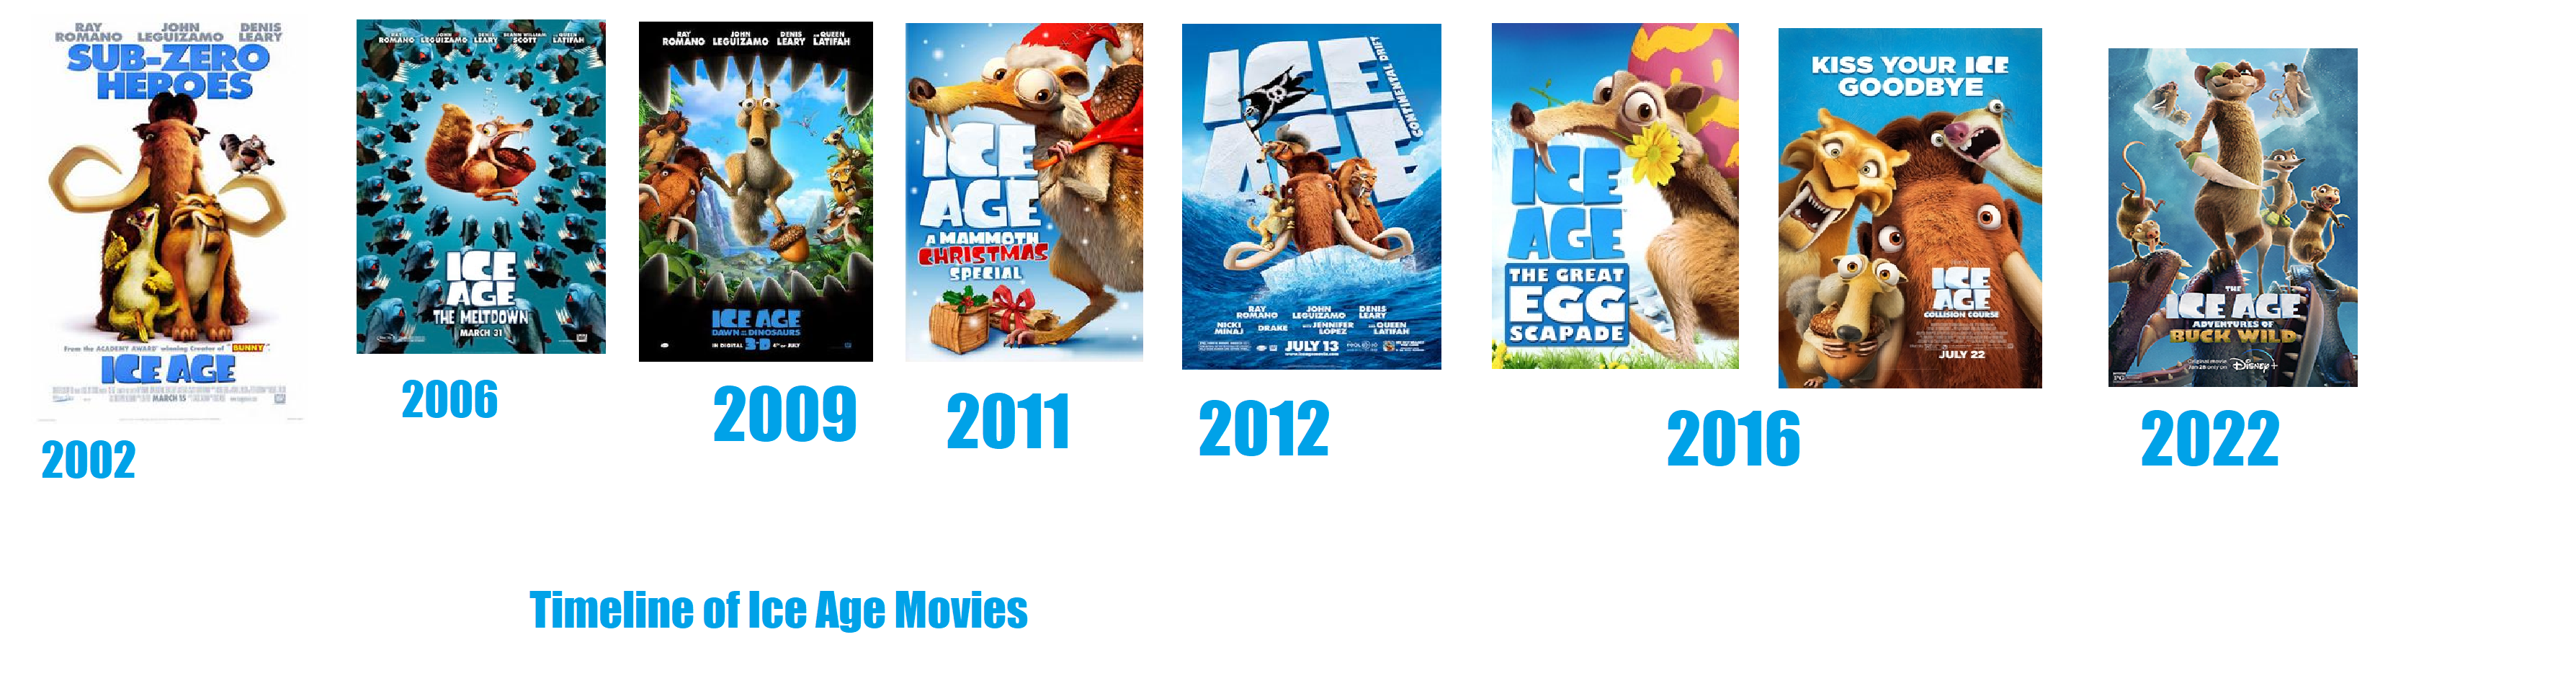 Ice Age Movies - Timeline Photos, Facebook